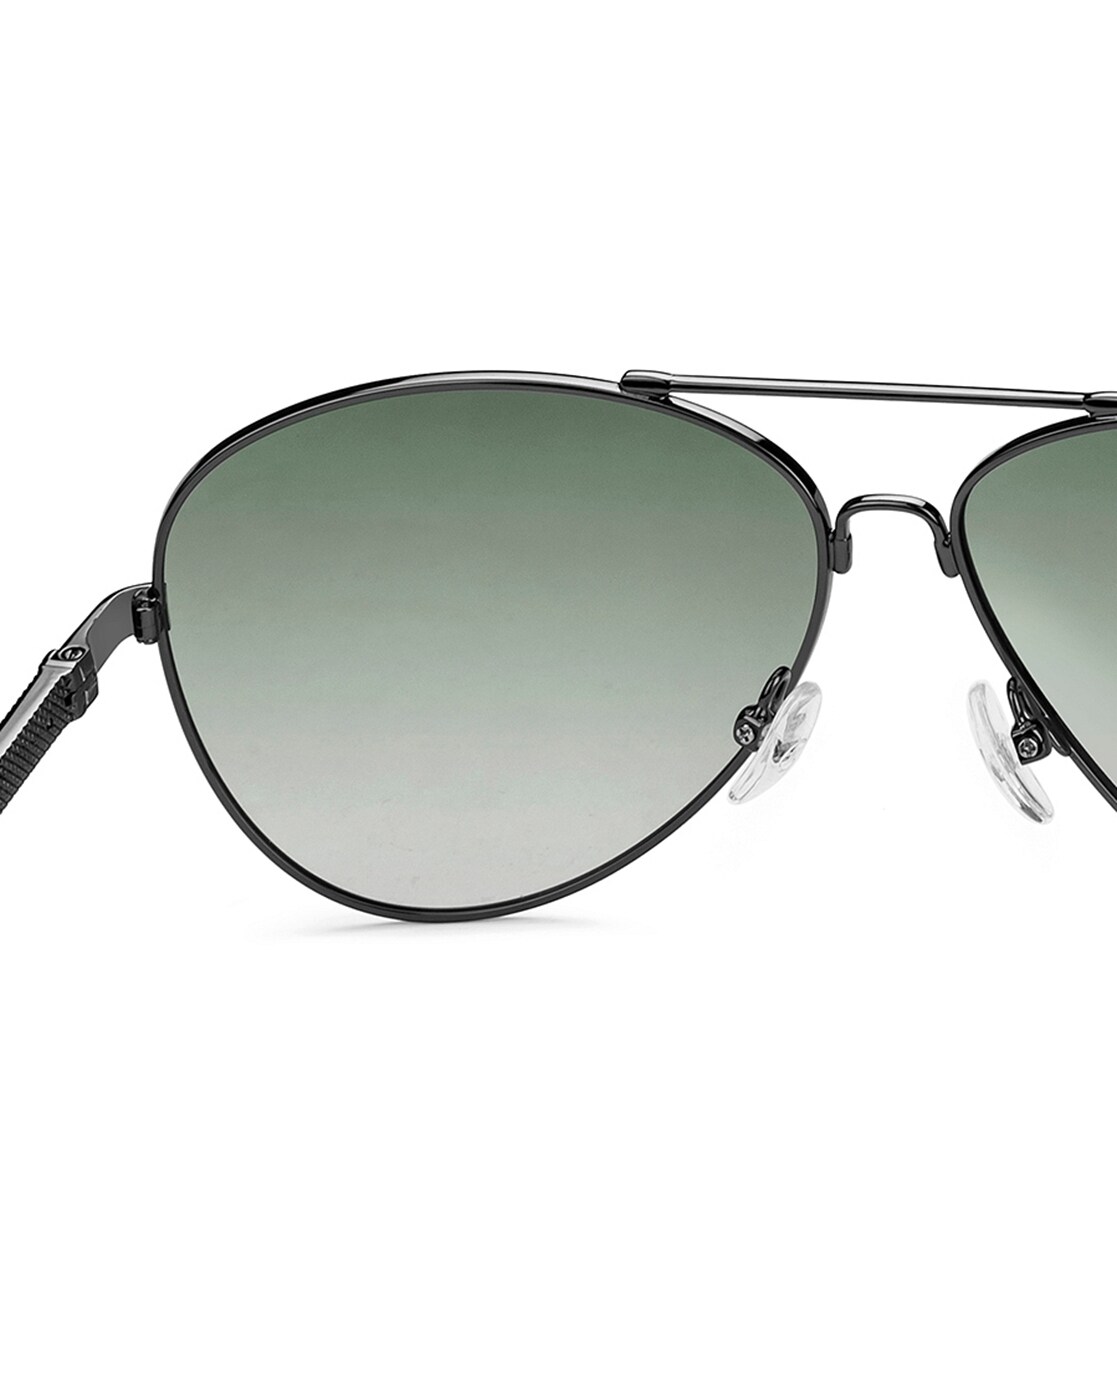 Buy Grey Sunglasses for Men by John Jacobs Online